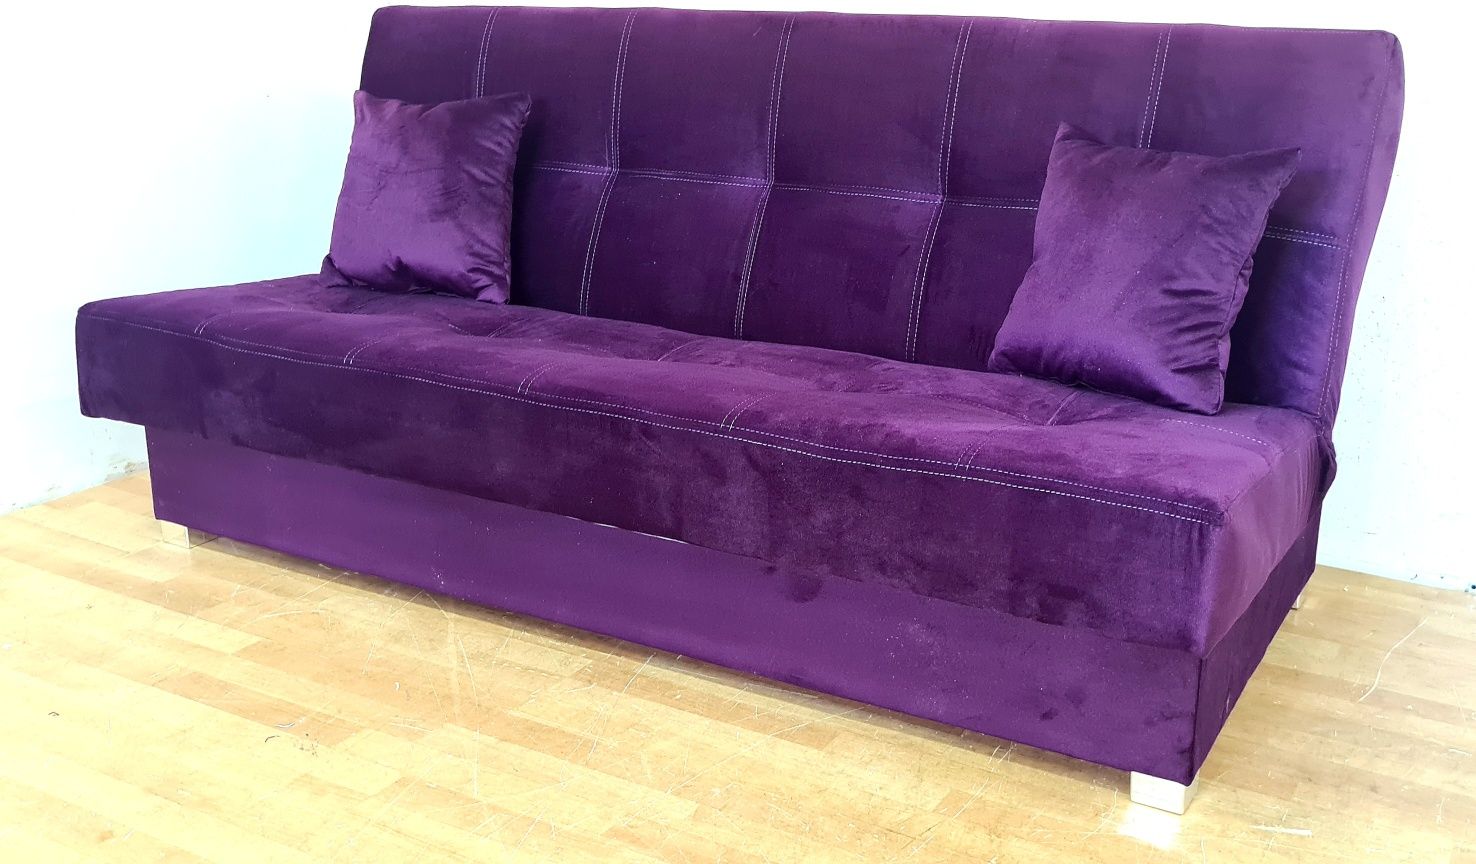 Nowa sofa MEGA PROMOCJA funkcja spania kanapa wersalka tapczan